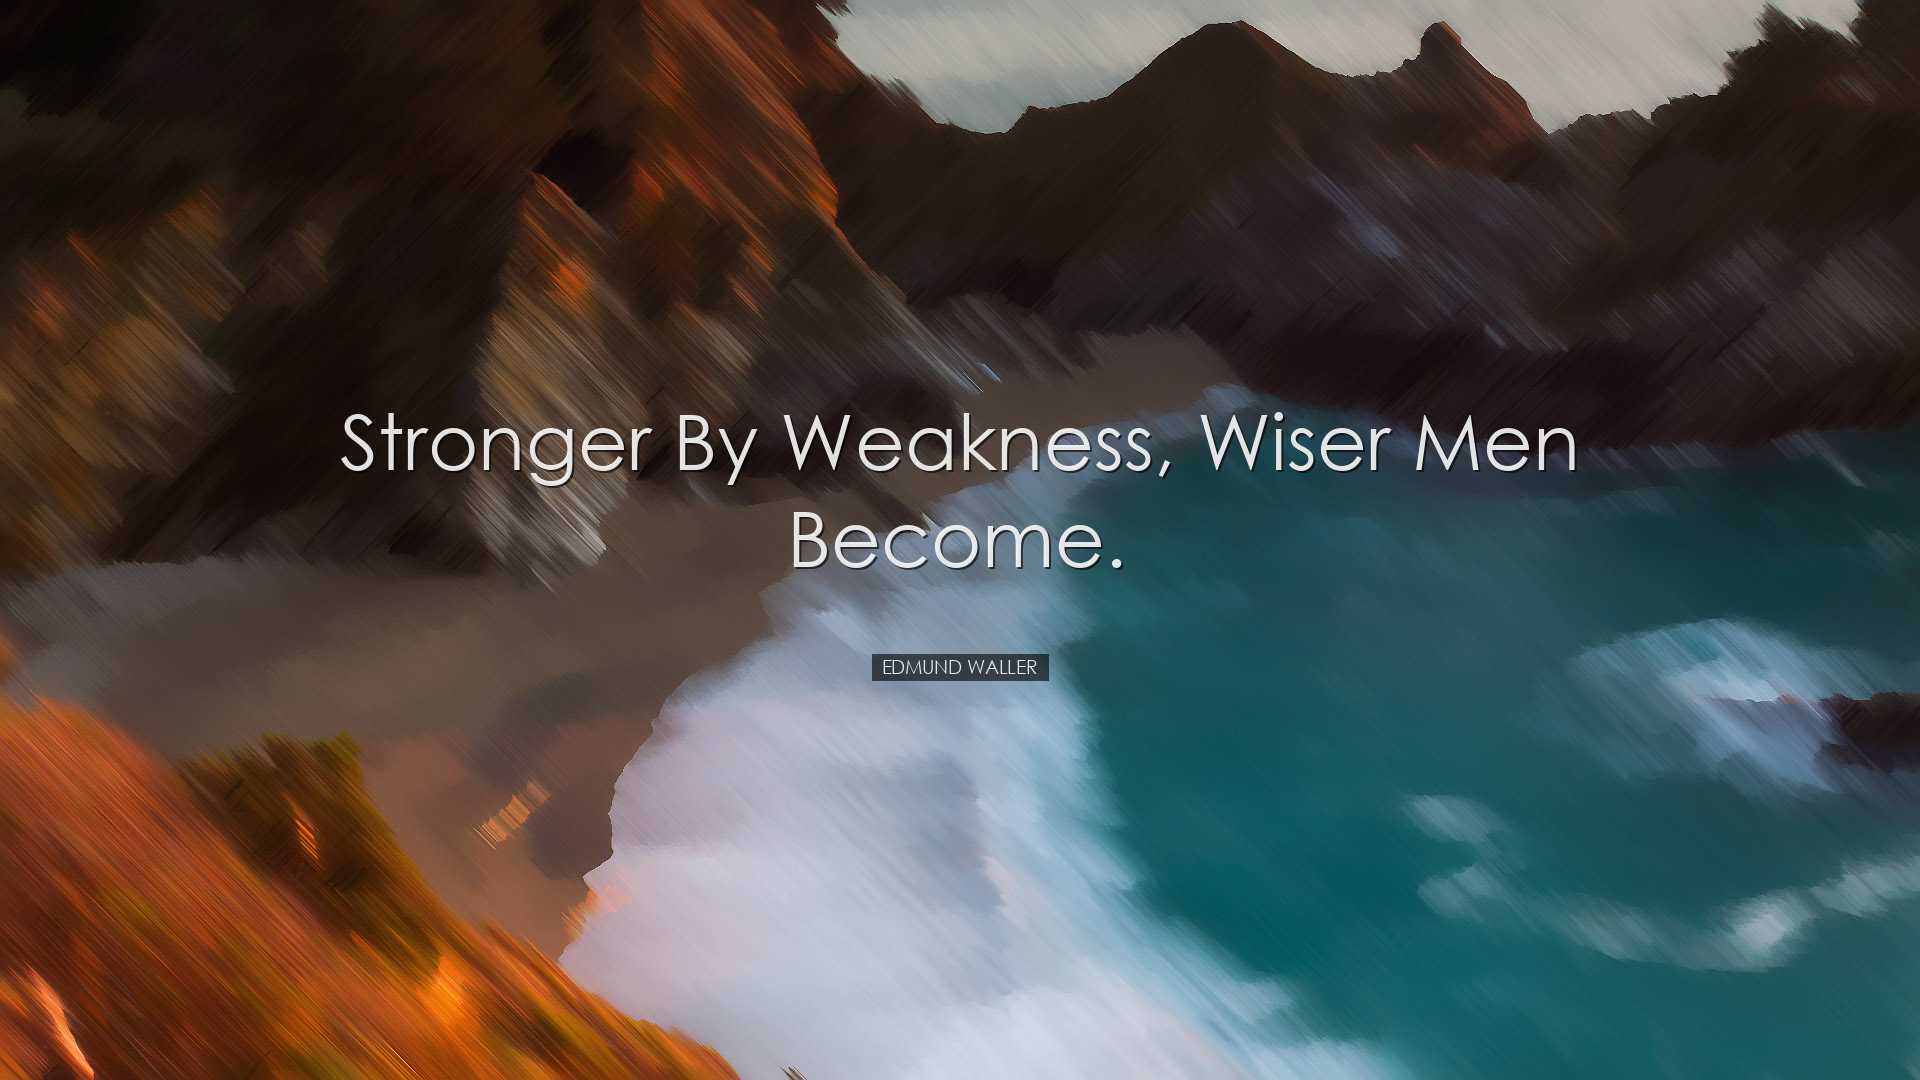 Stronger by weakness, wiser men become. - Edmund Waller